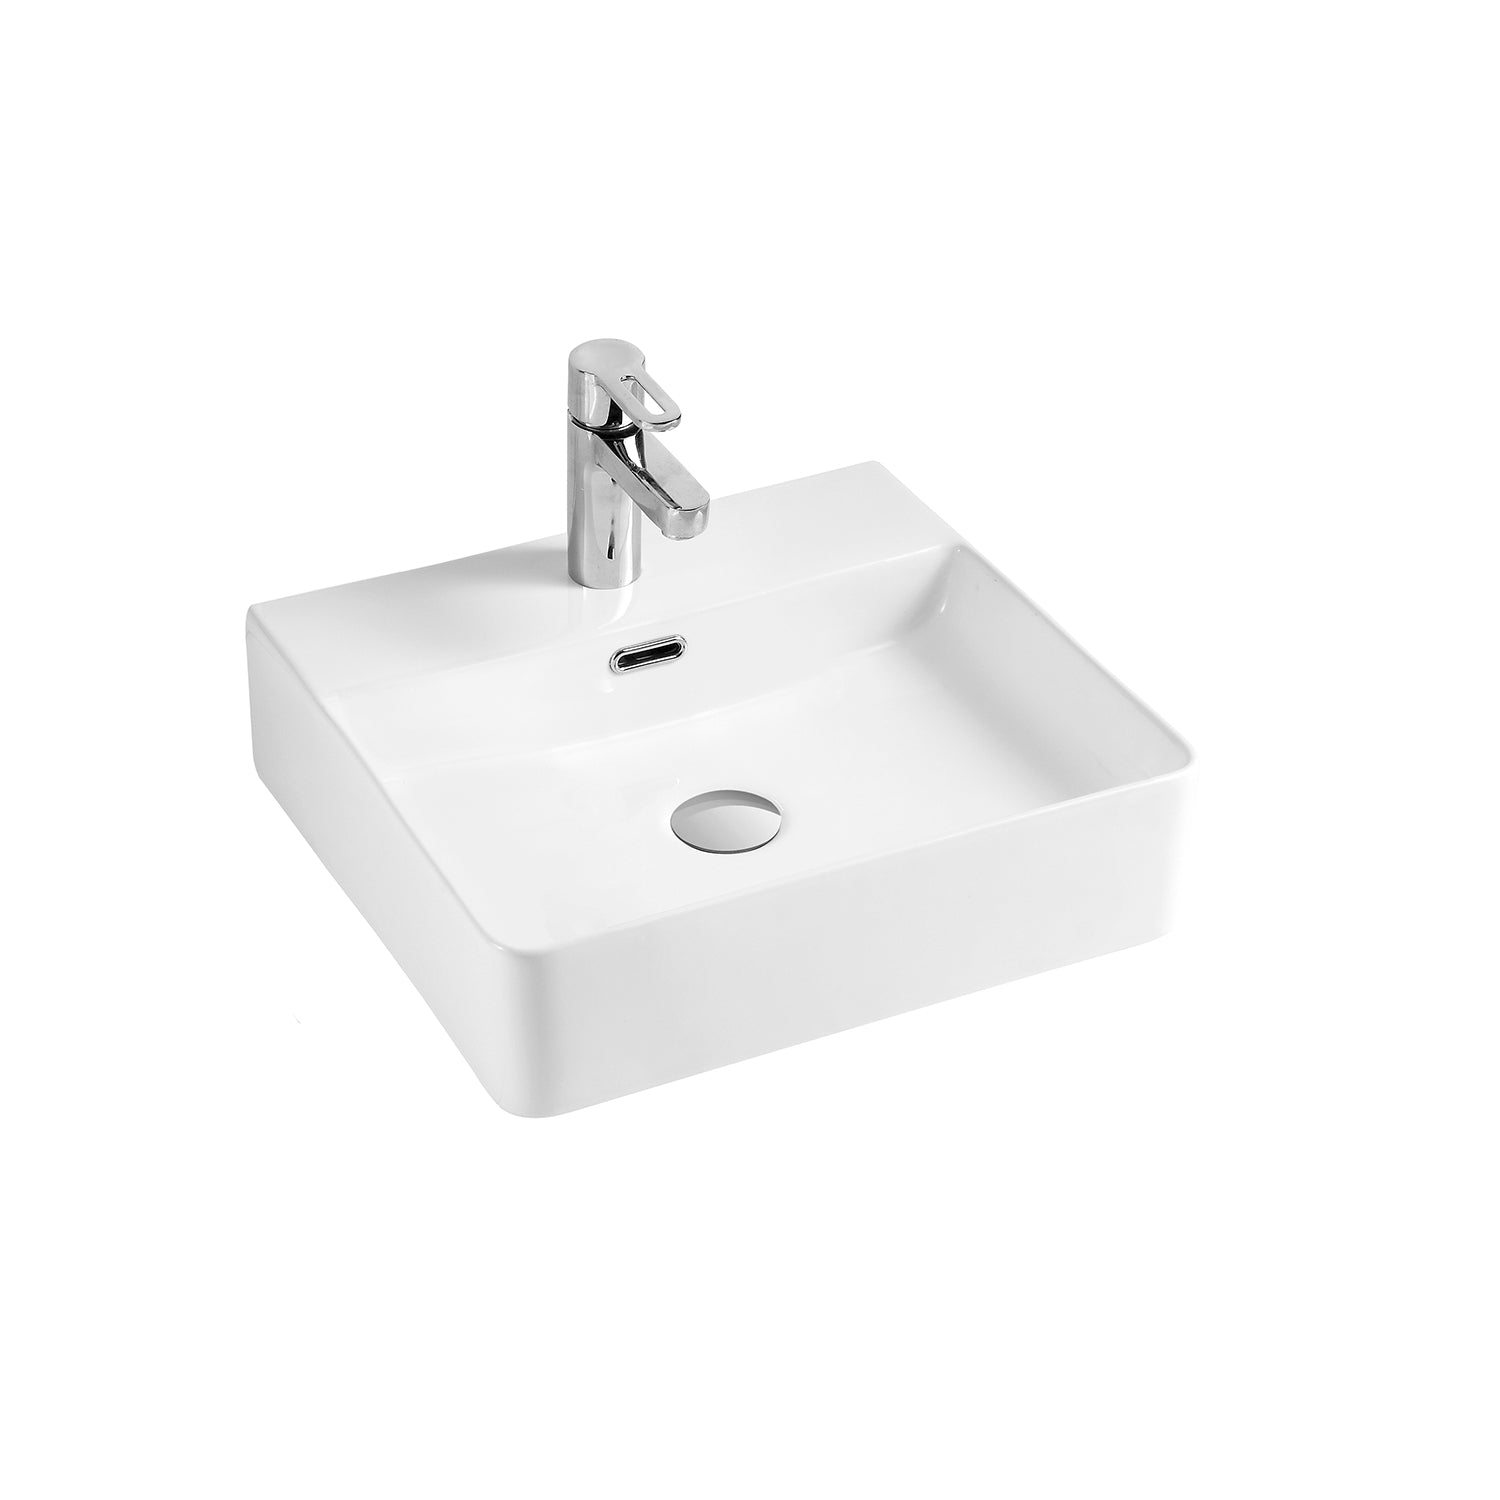 DAX  Ceramic Square Single Bowl Bathroom Vessel Basin (BSN-CL1274)